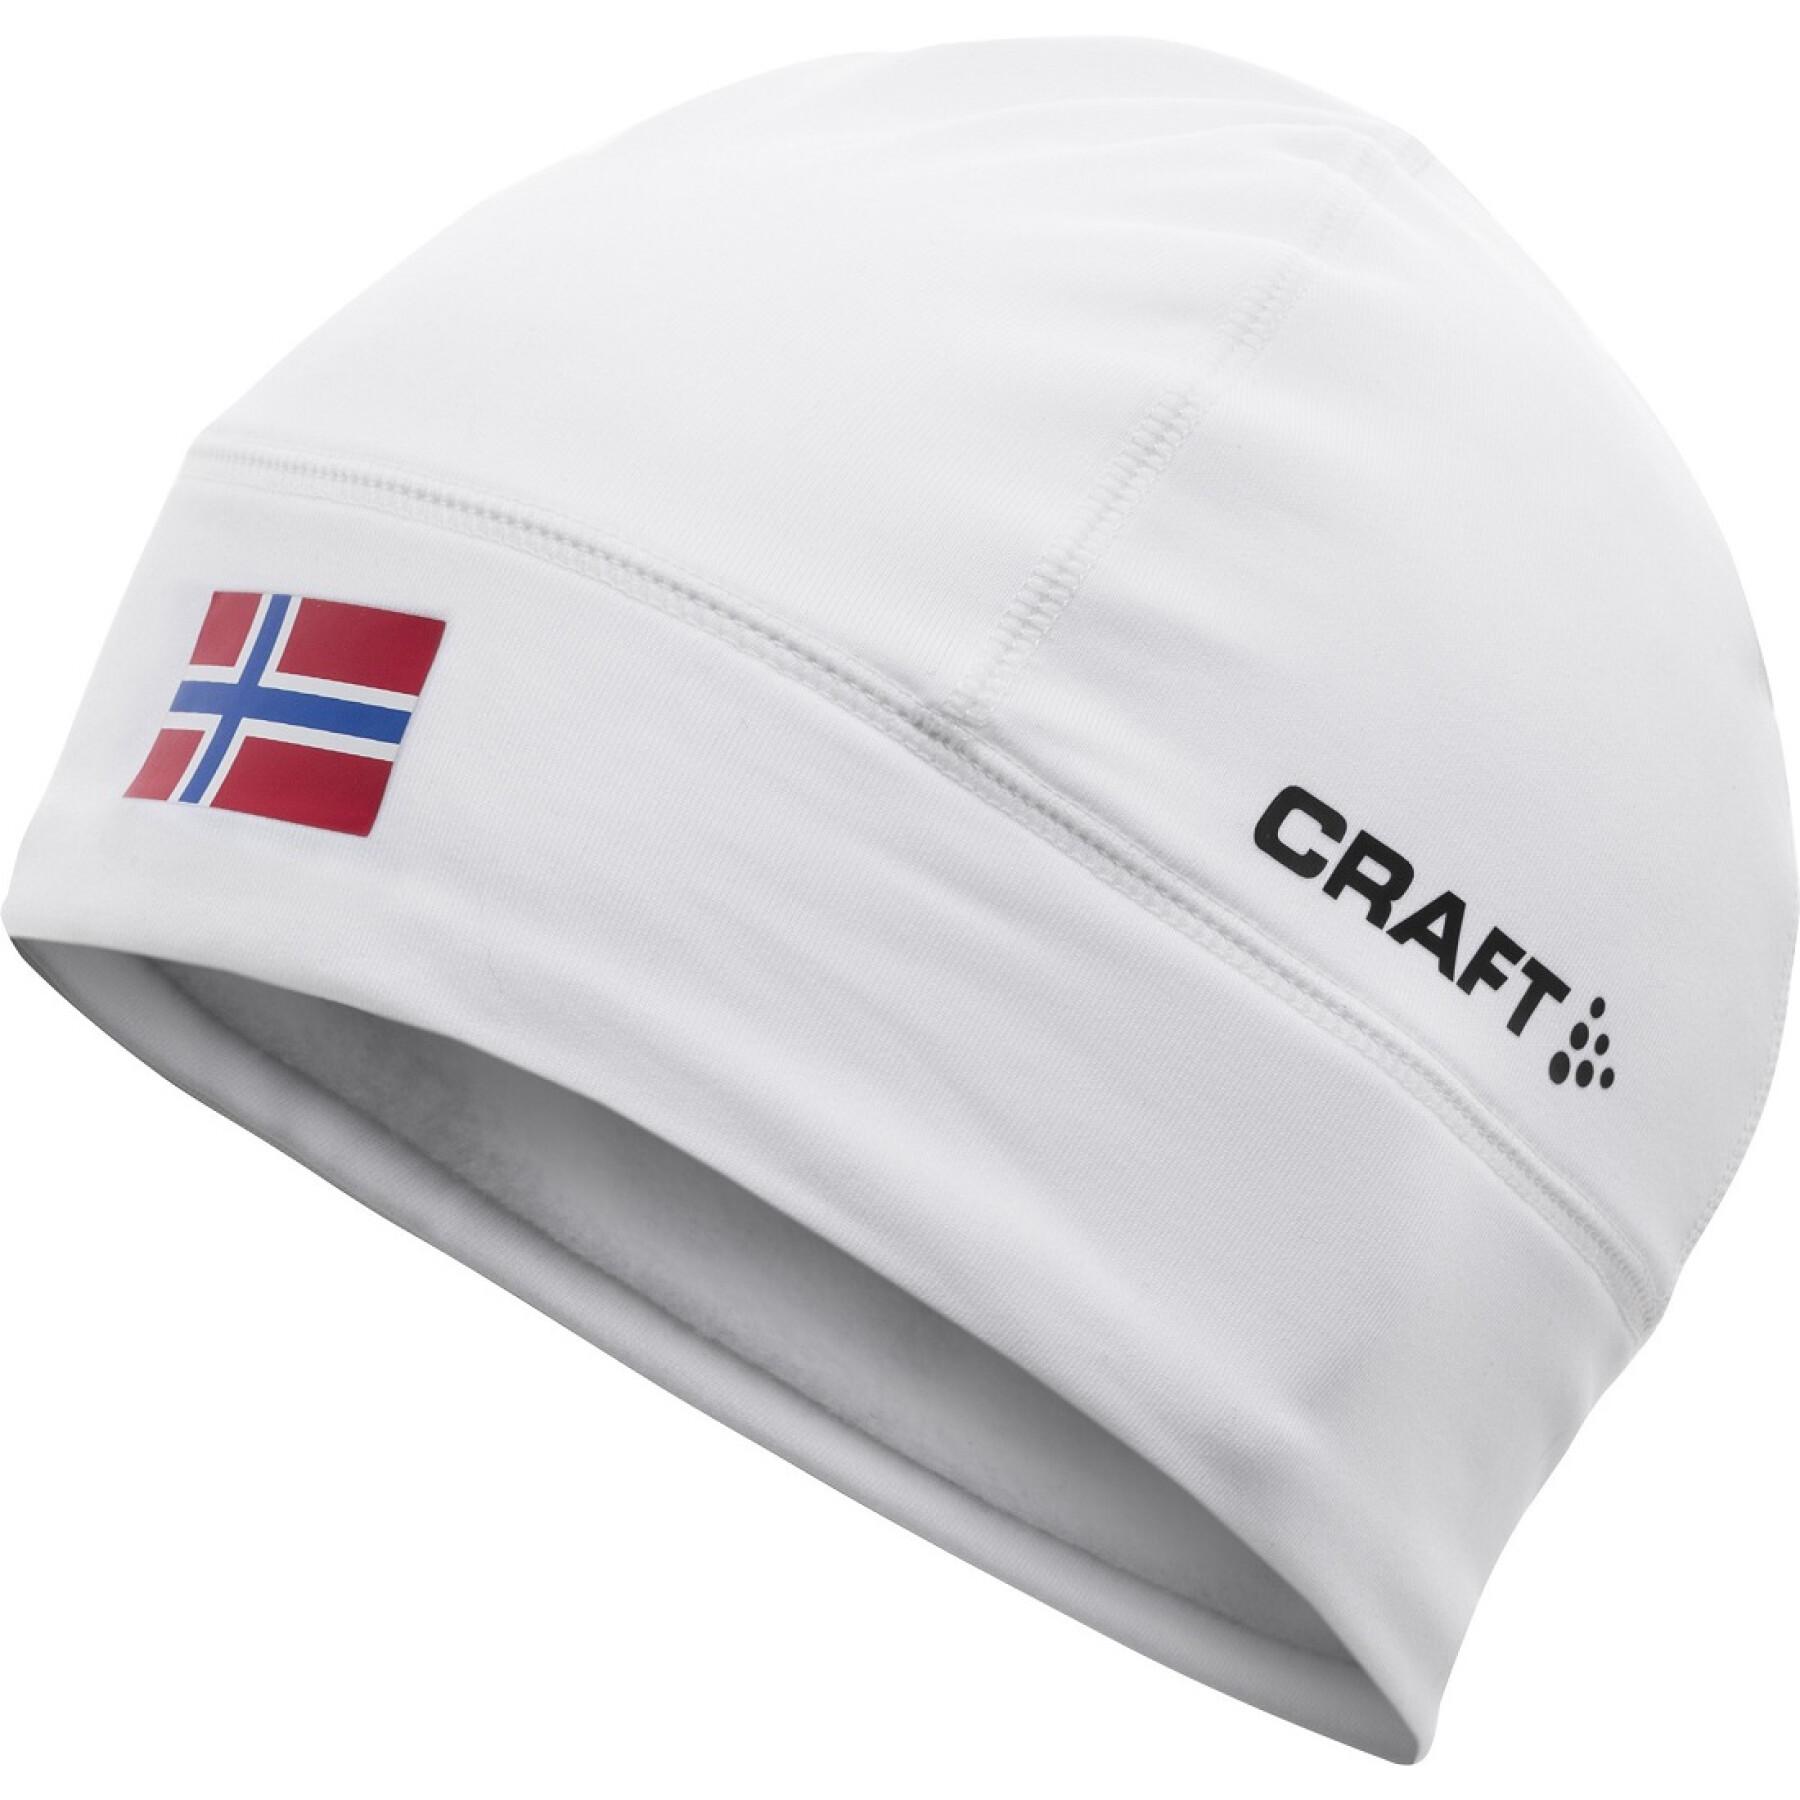 Gorra de esquí de fondo Noruega Craft